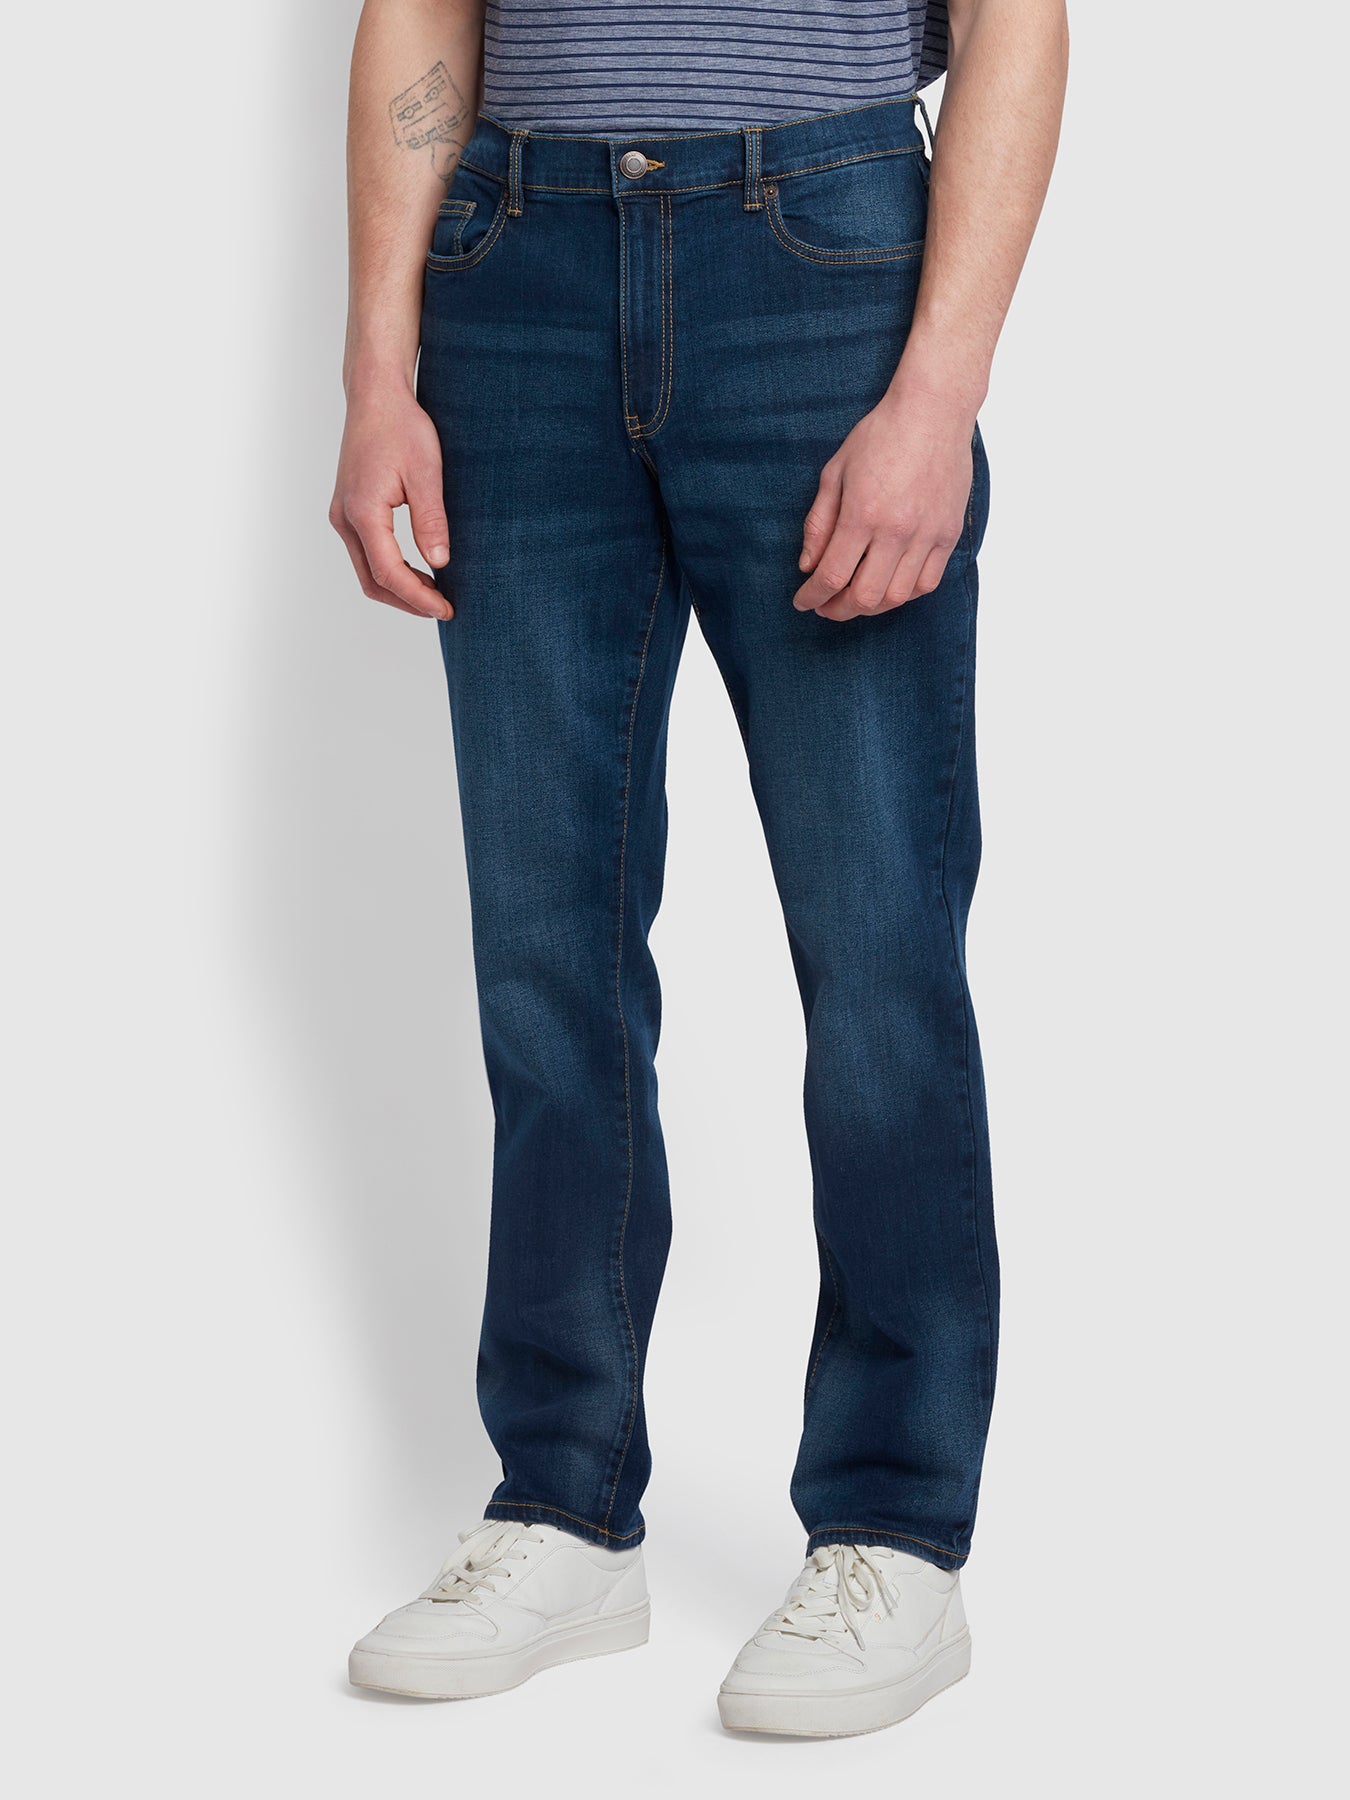 View Lawson Regular Fit Stretch Jeans In Mid Denim information